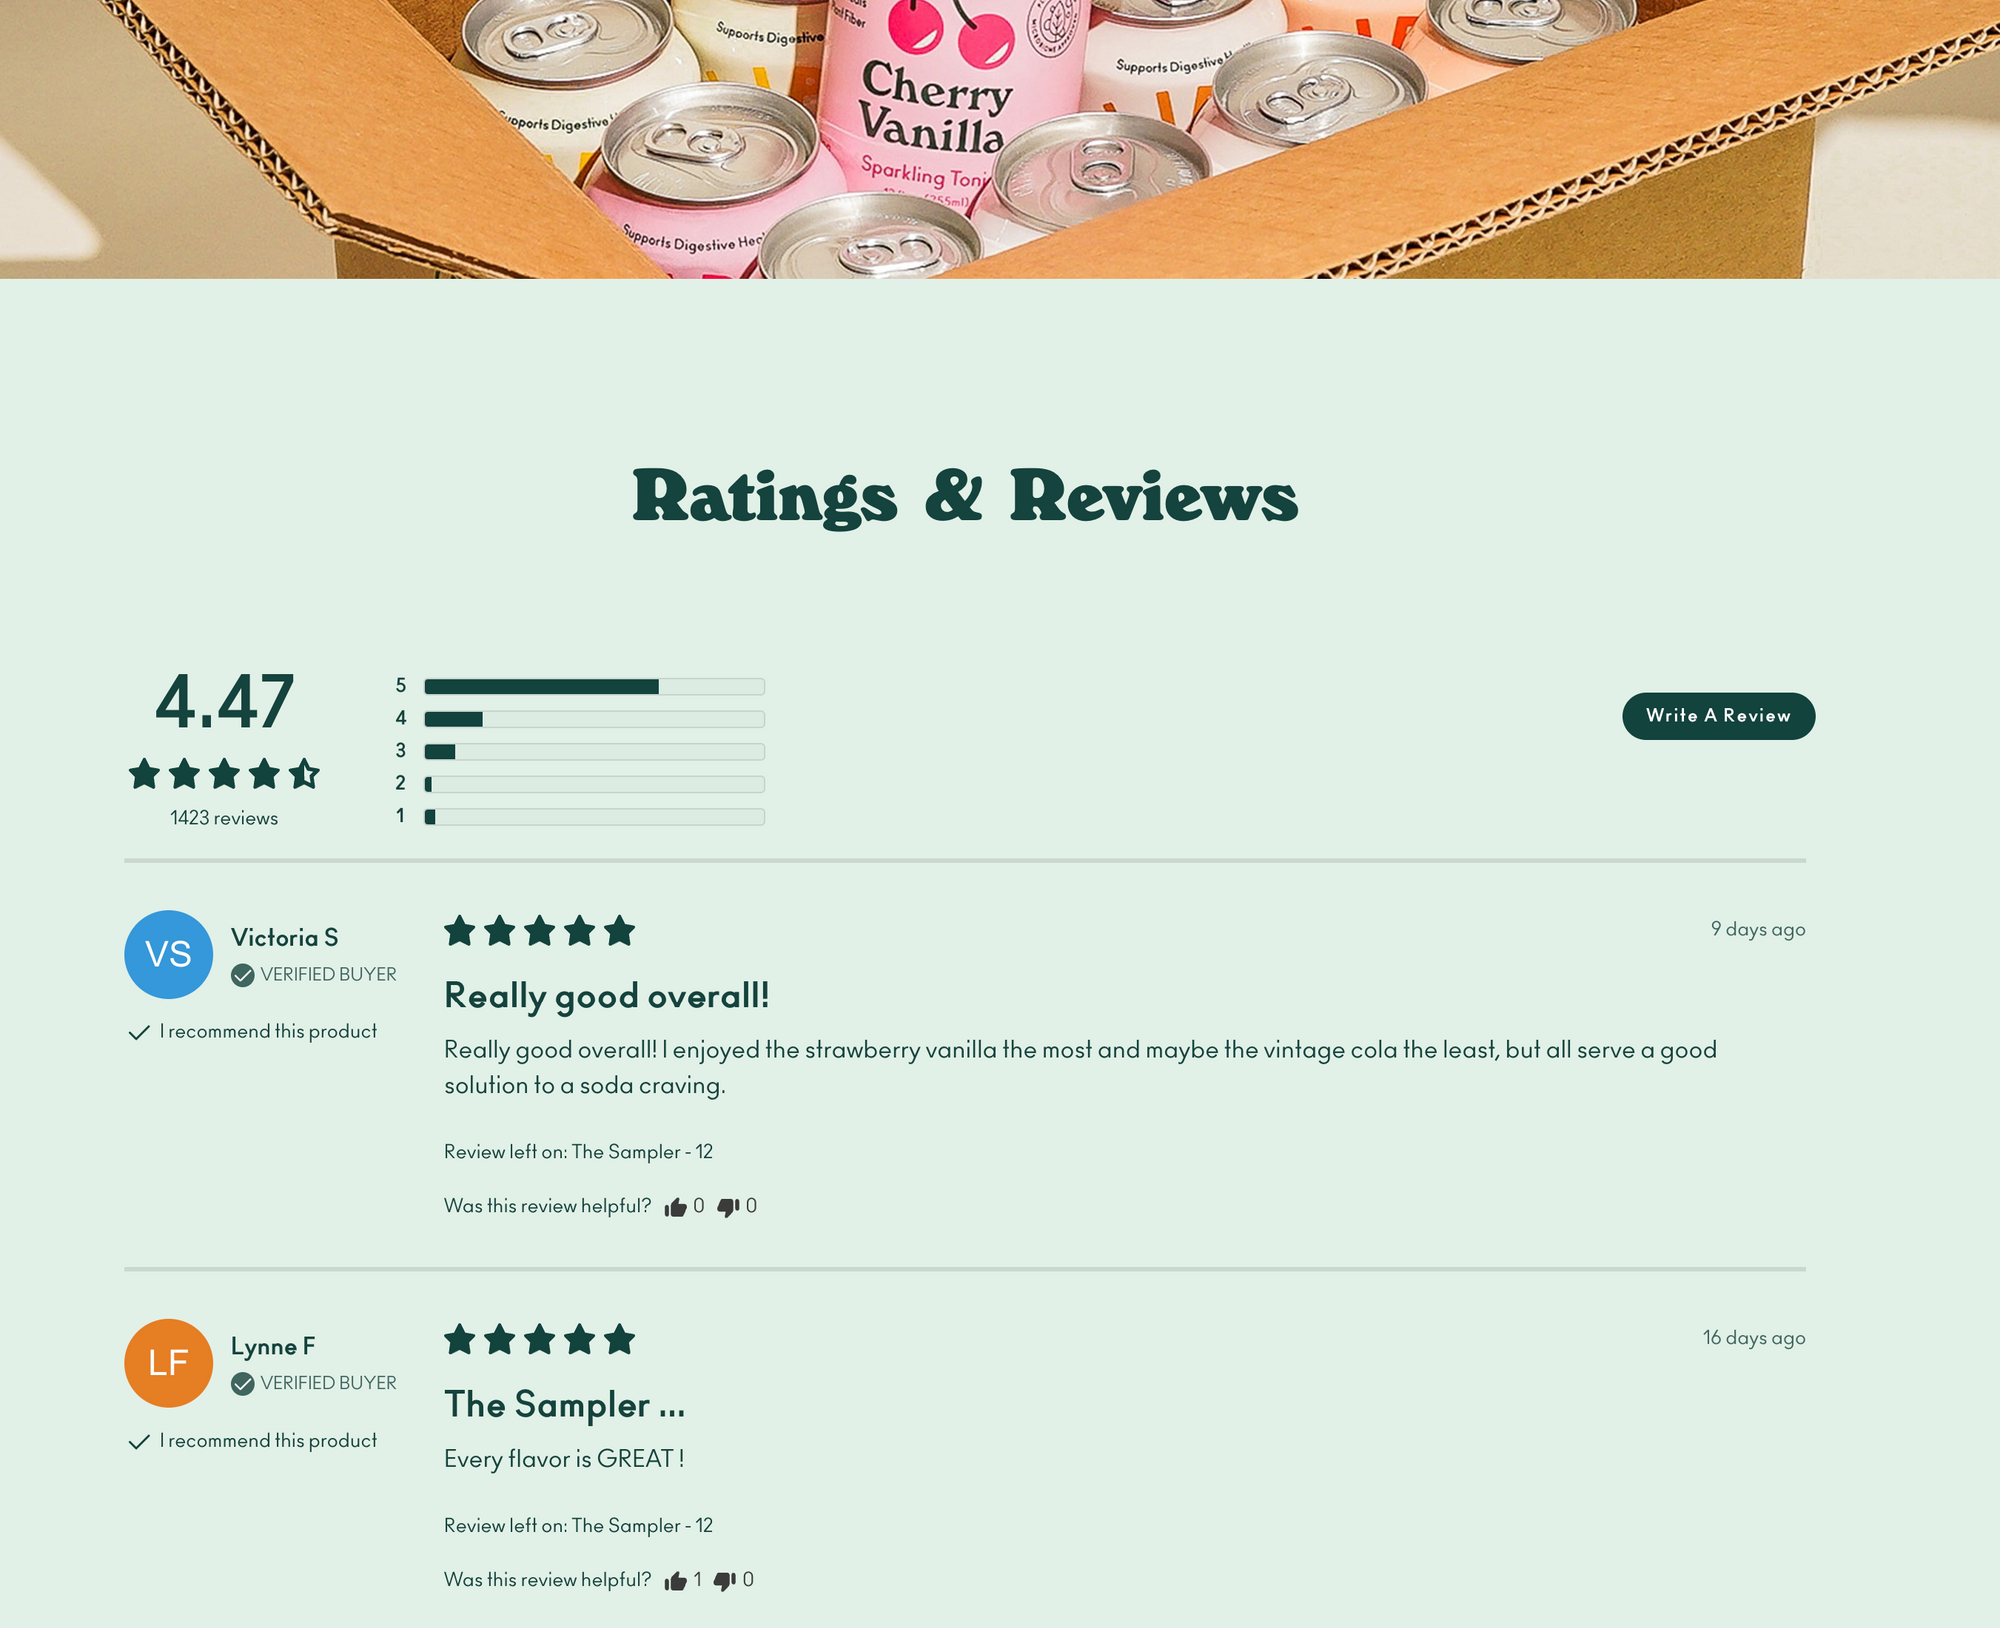 Reviews on Olipop's "The Sampler" variety pack - desktop view